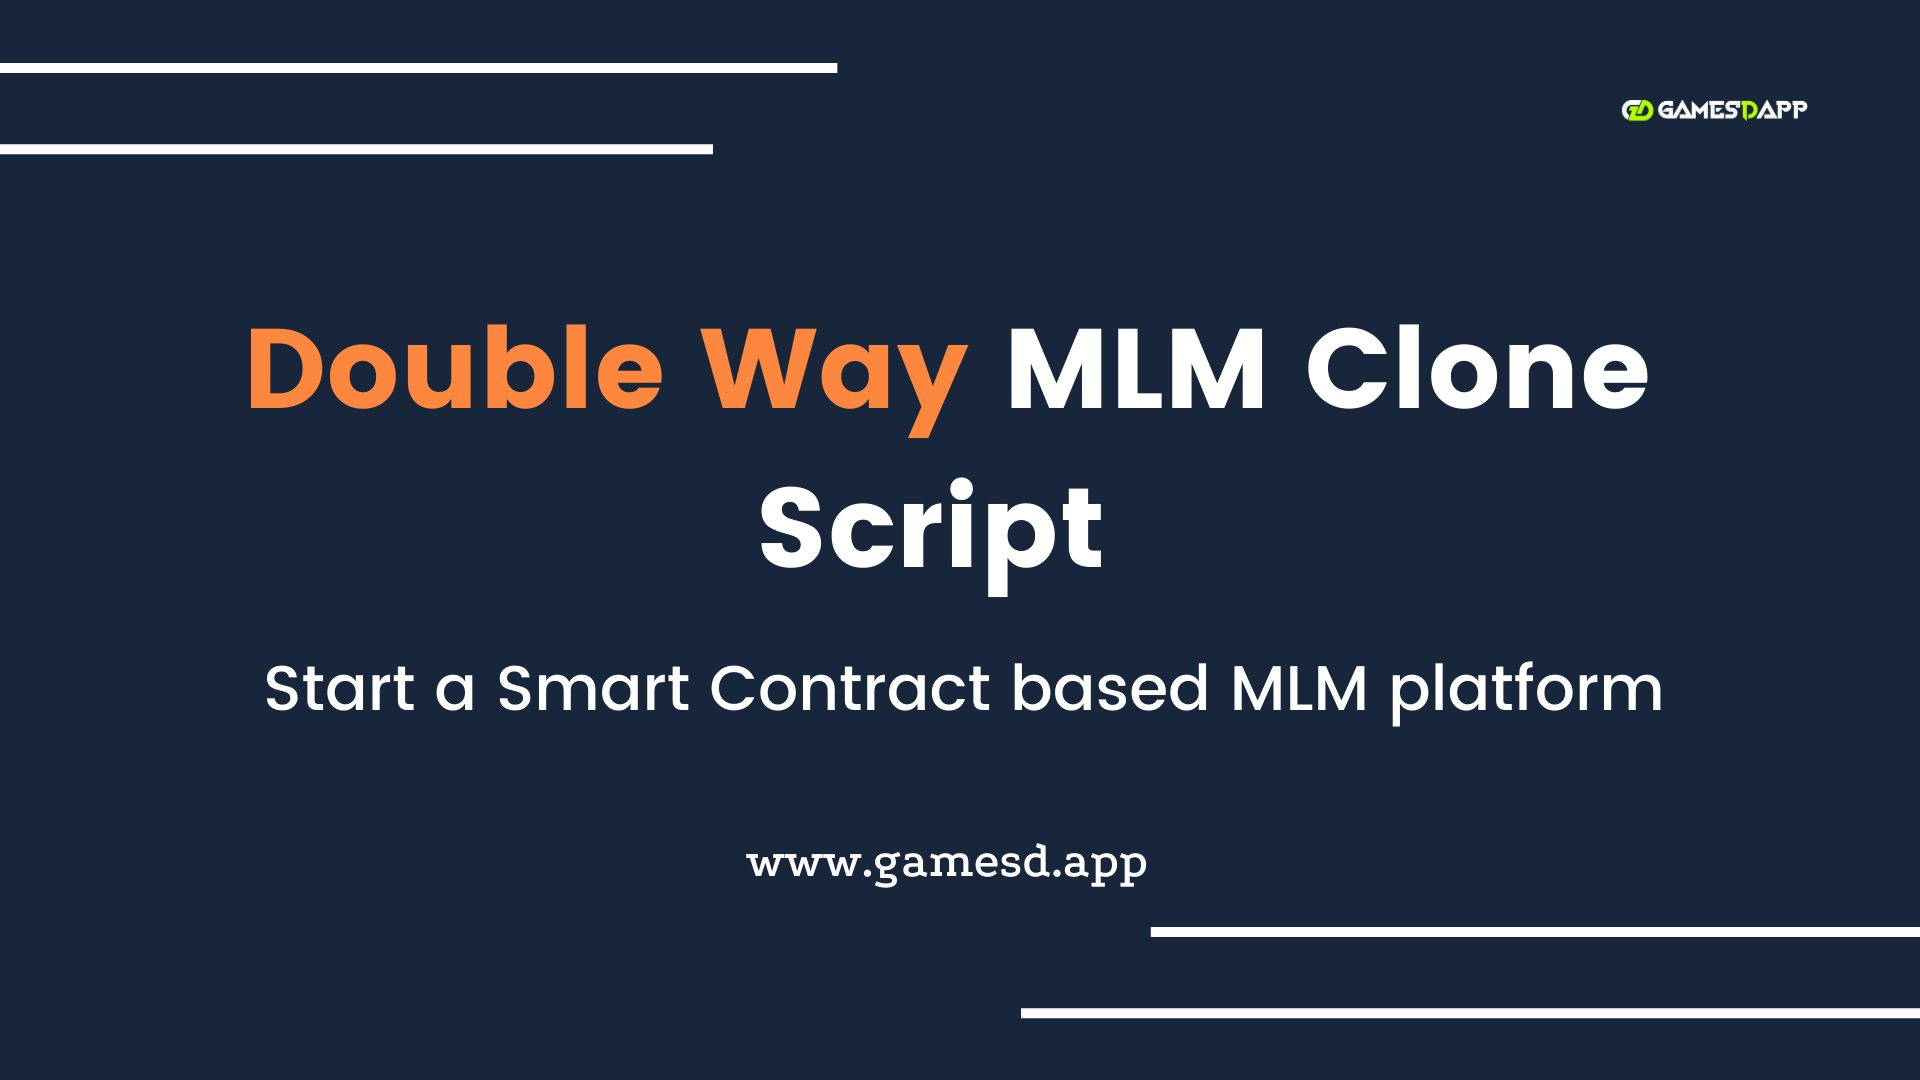 Doubleway Clone Script - To Build Ethereum Smart Contract Based MLM Platform Like Doubleway